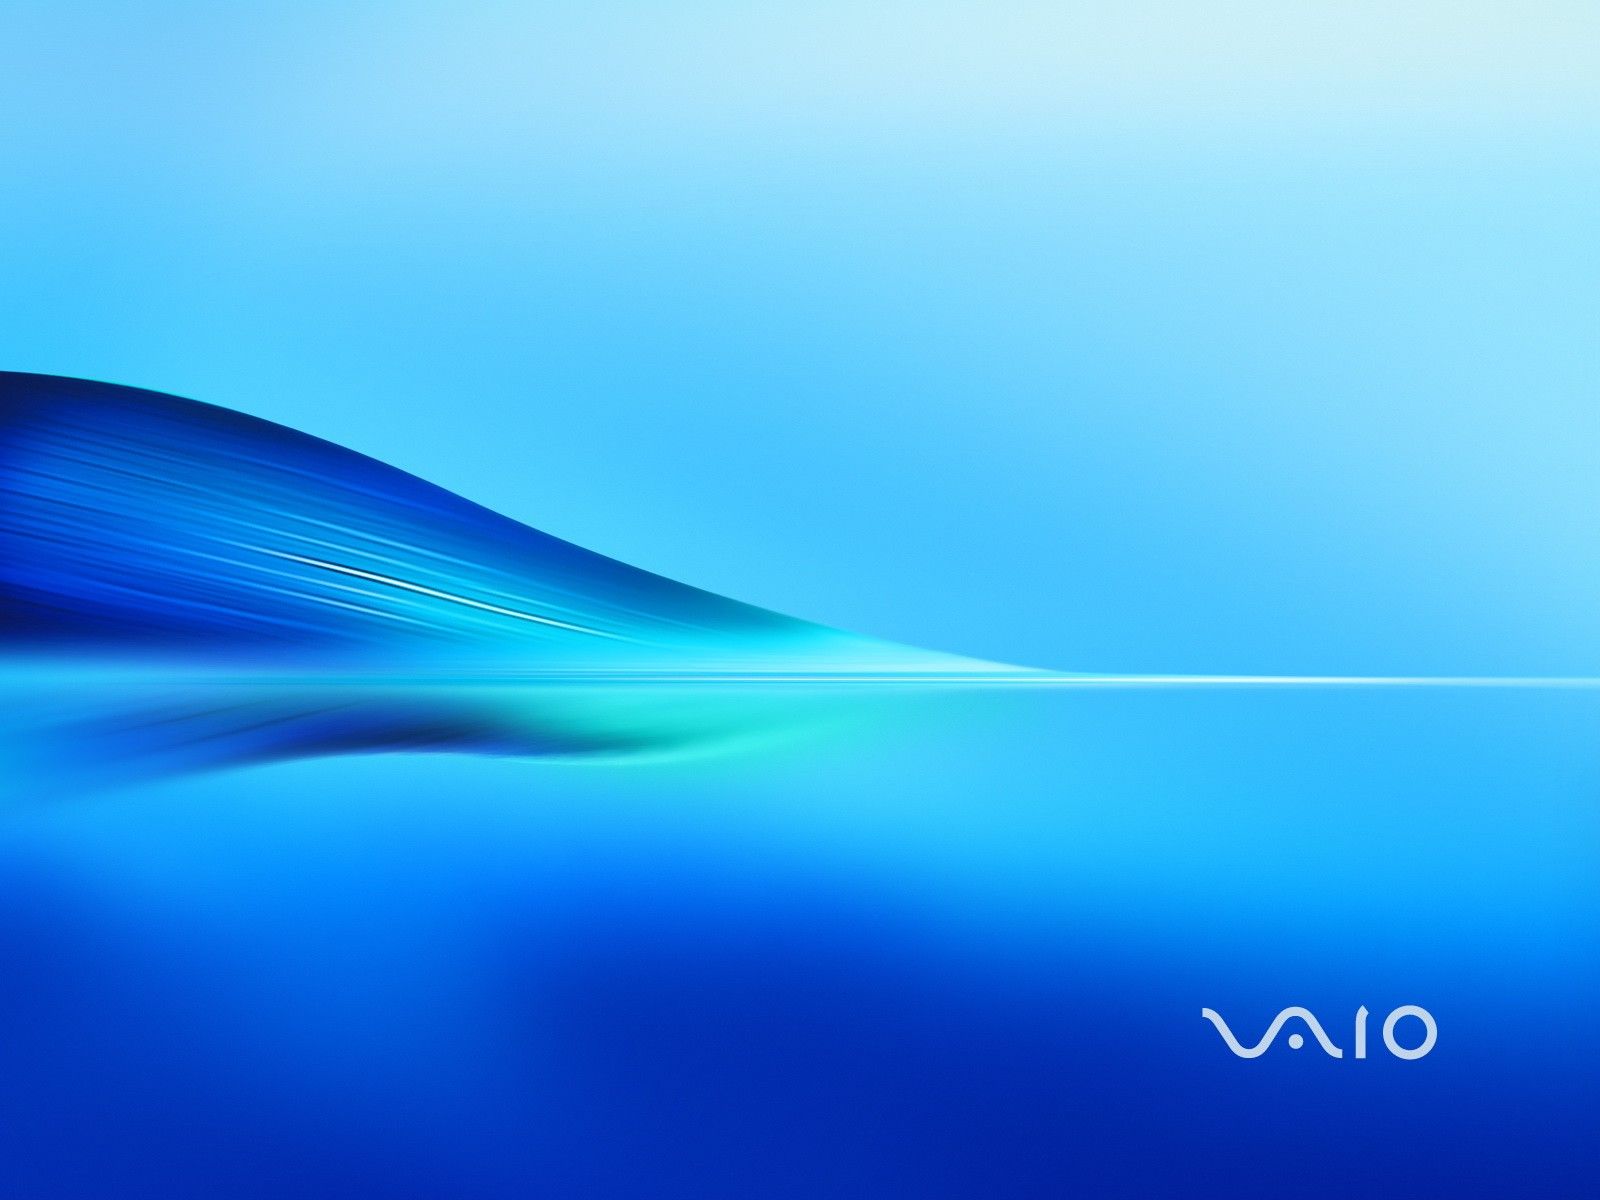 Best Of sony Vaio Laptop themes Free Download Windows 7. Fotografia de paisagem, Fotografia, Paisagens